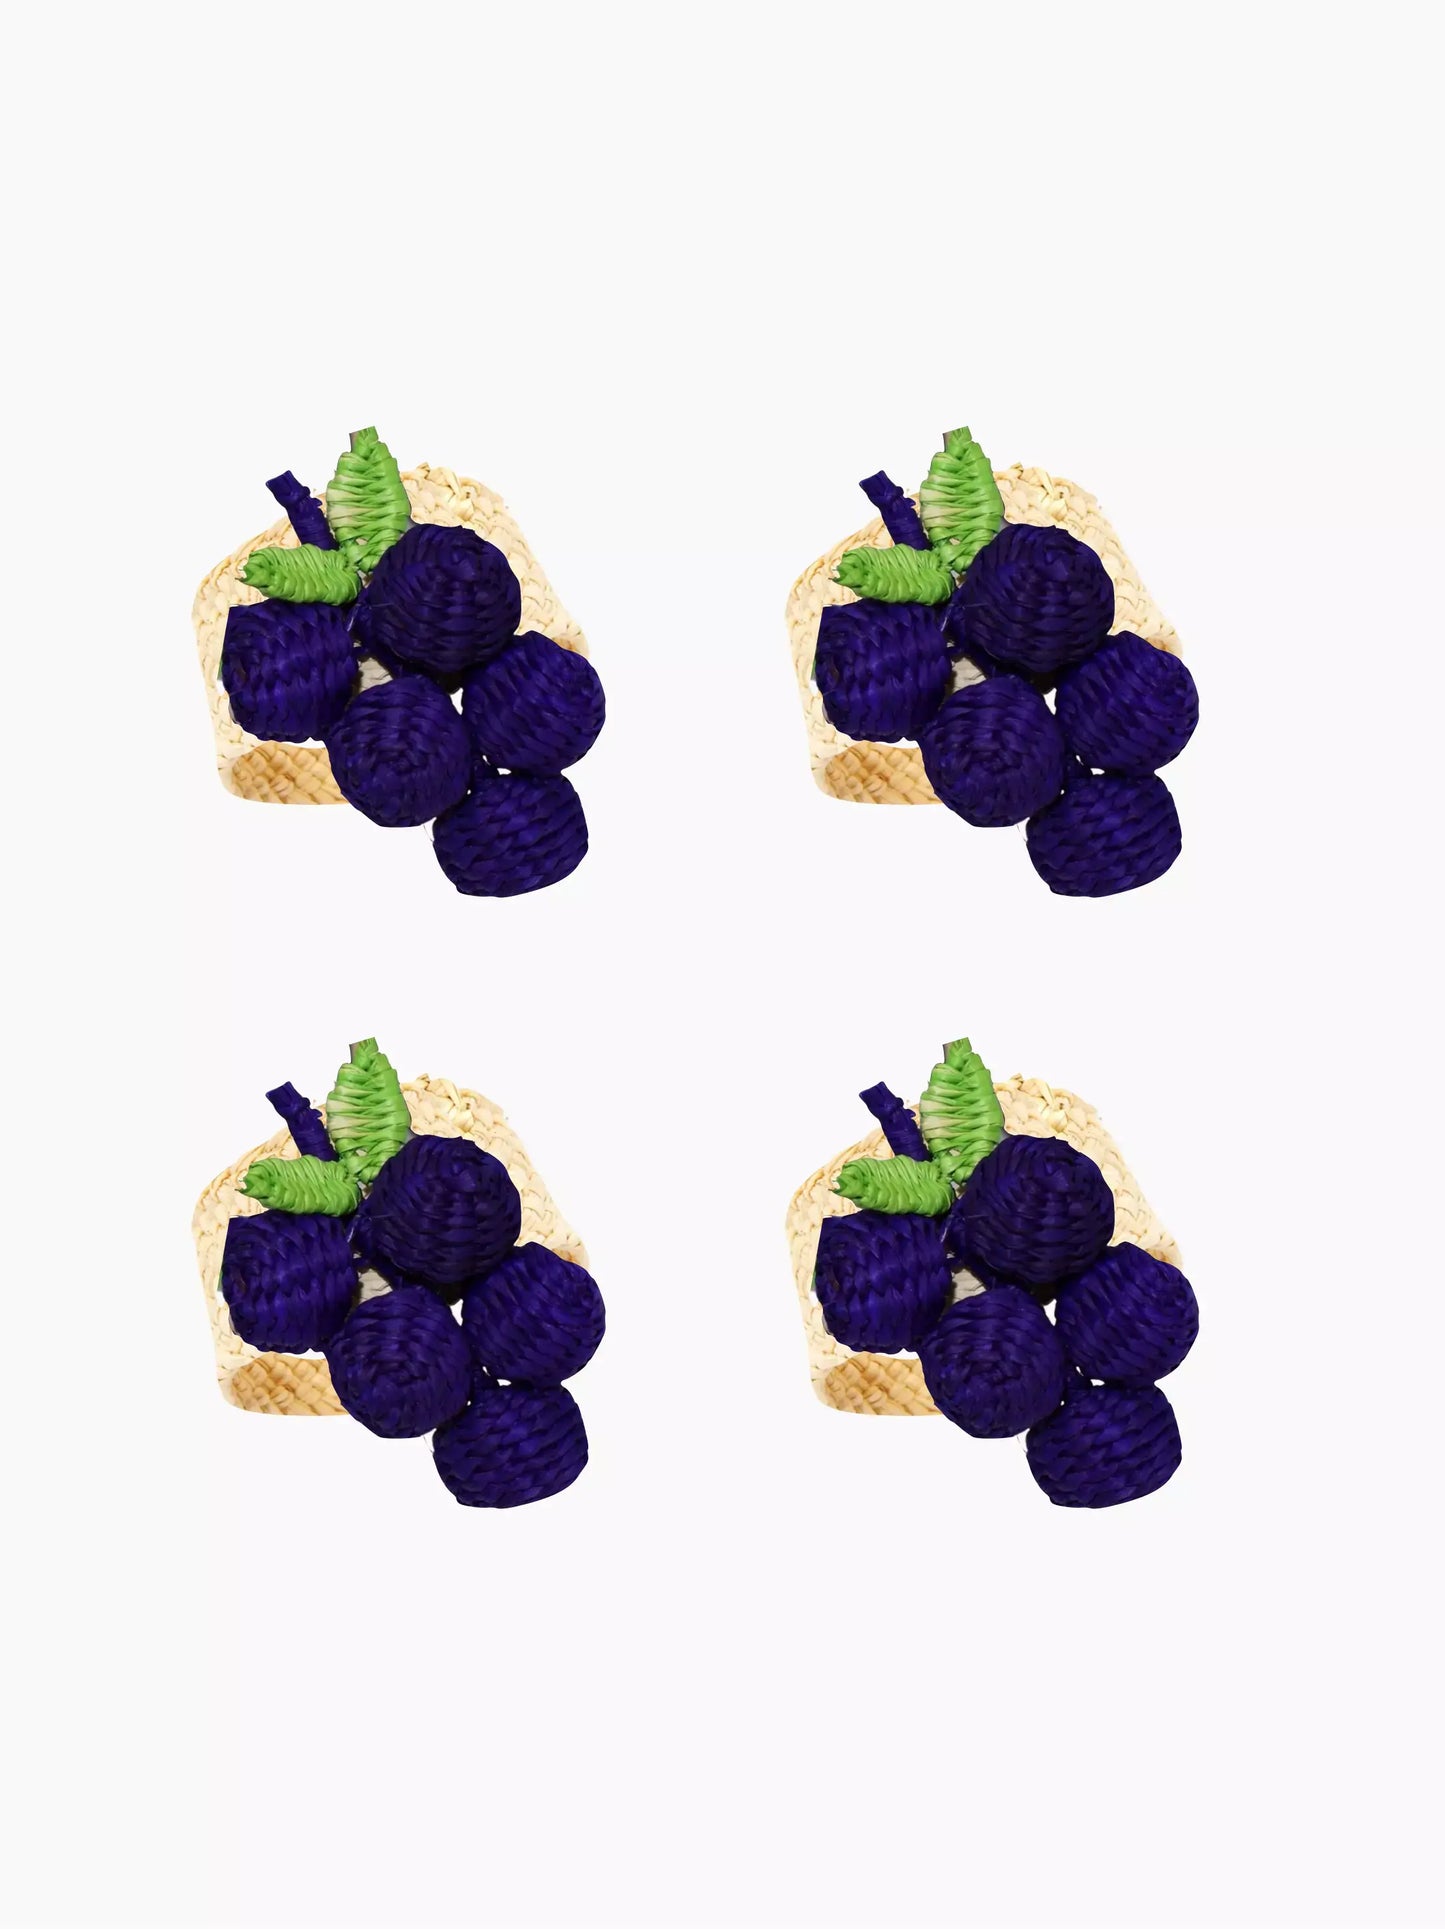 Woven Straw Grape Napkin Rings Set of 4